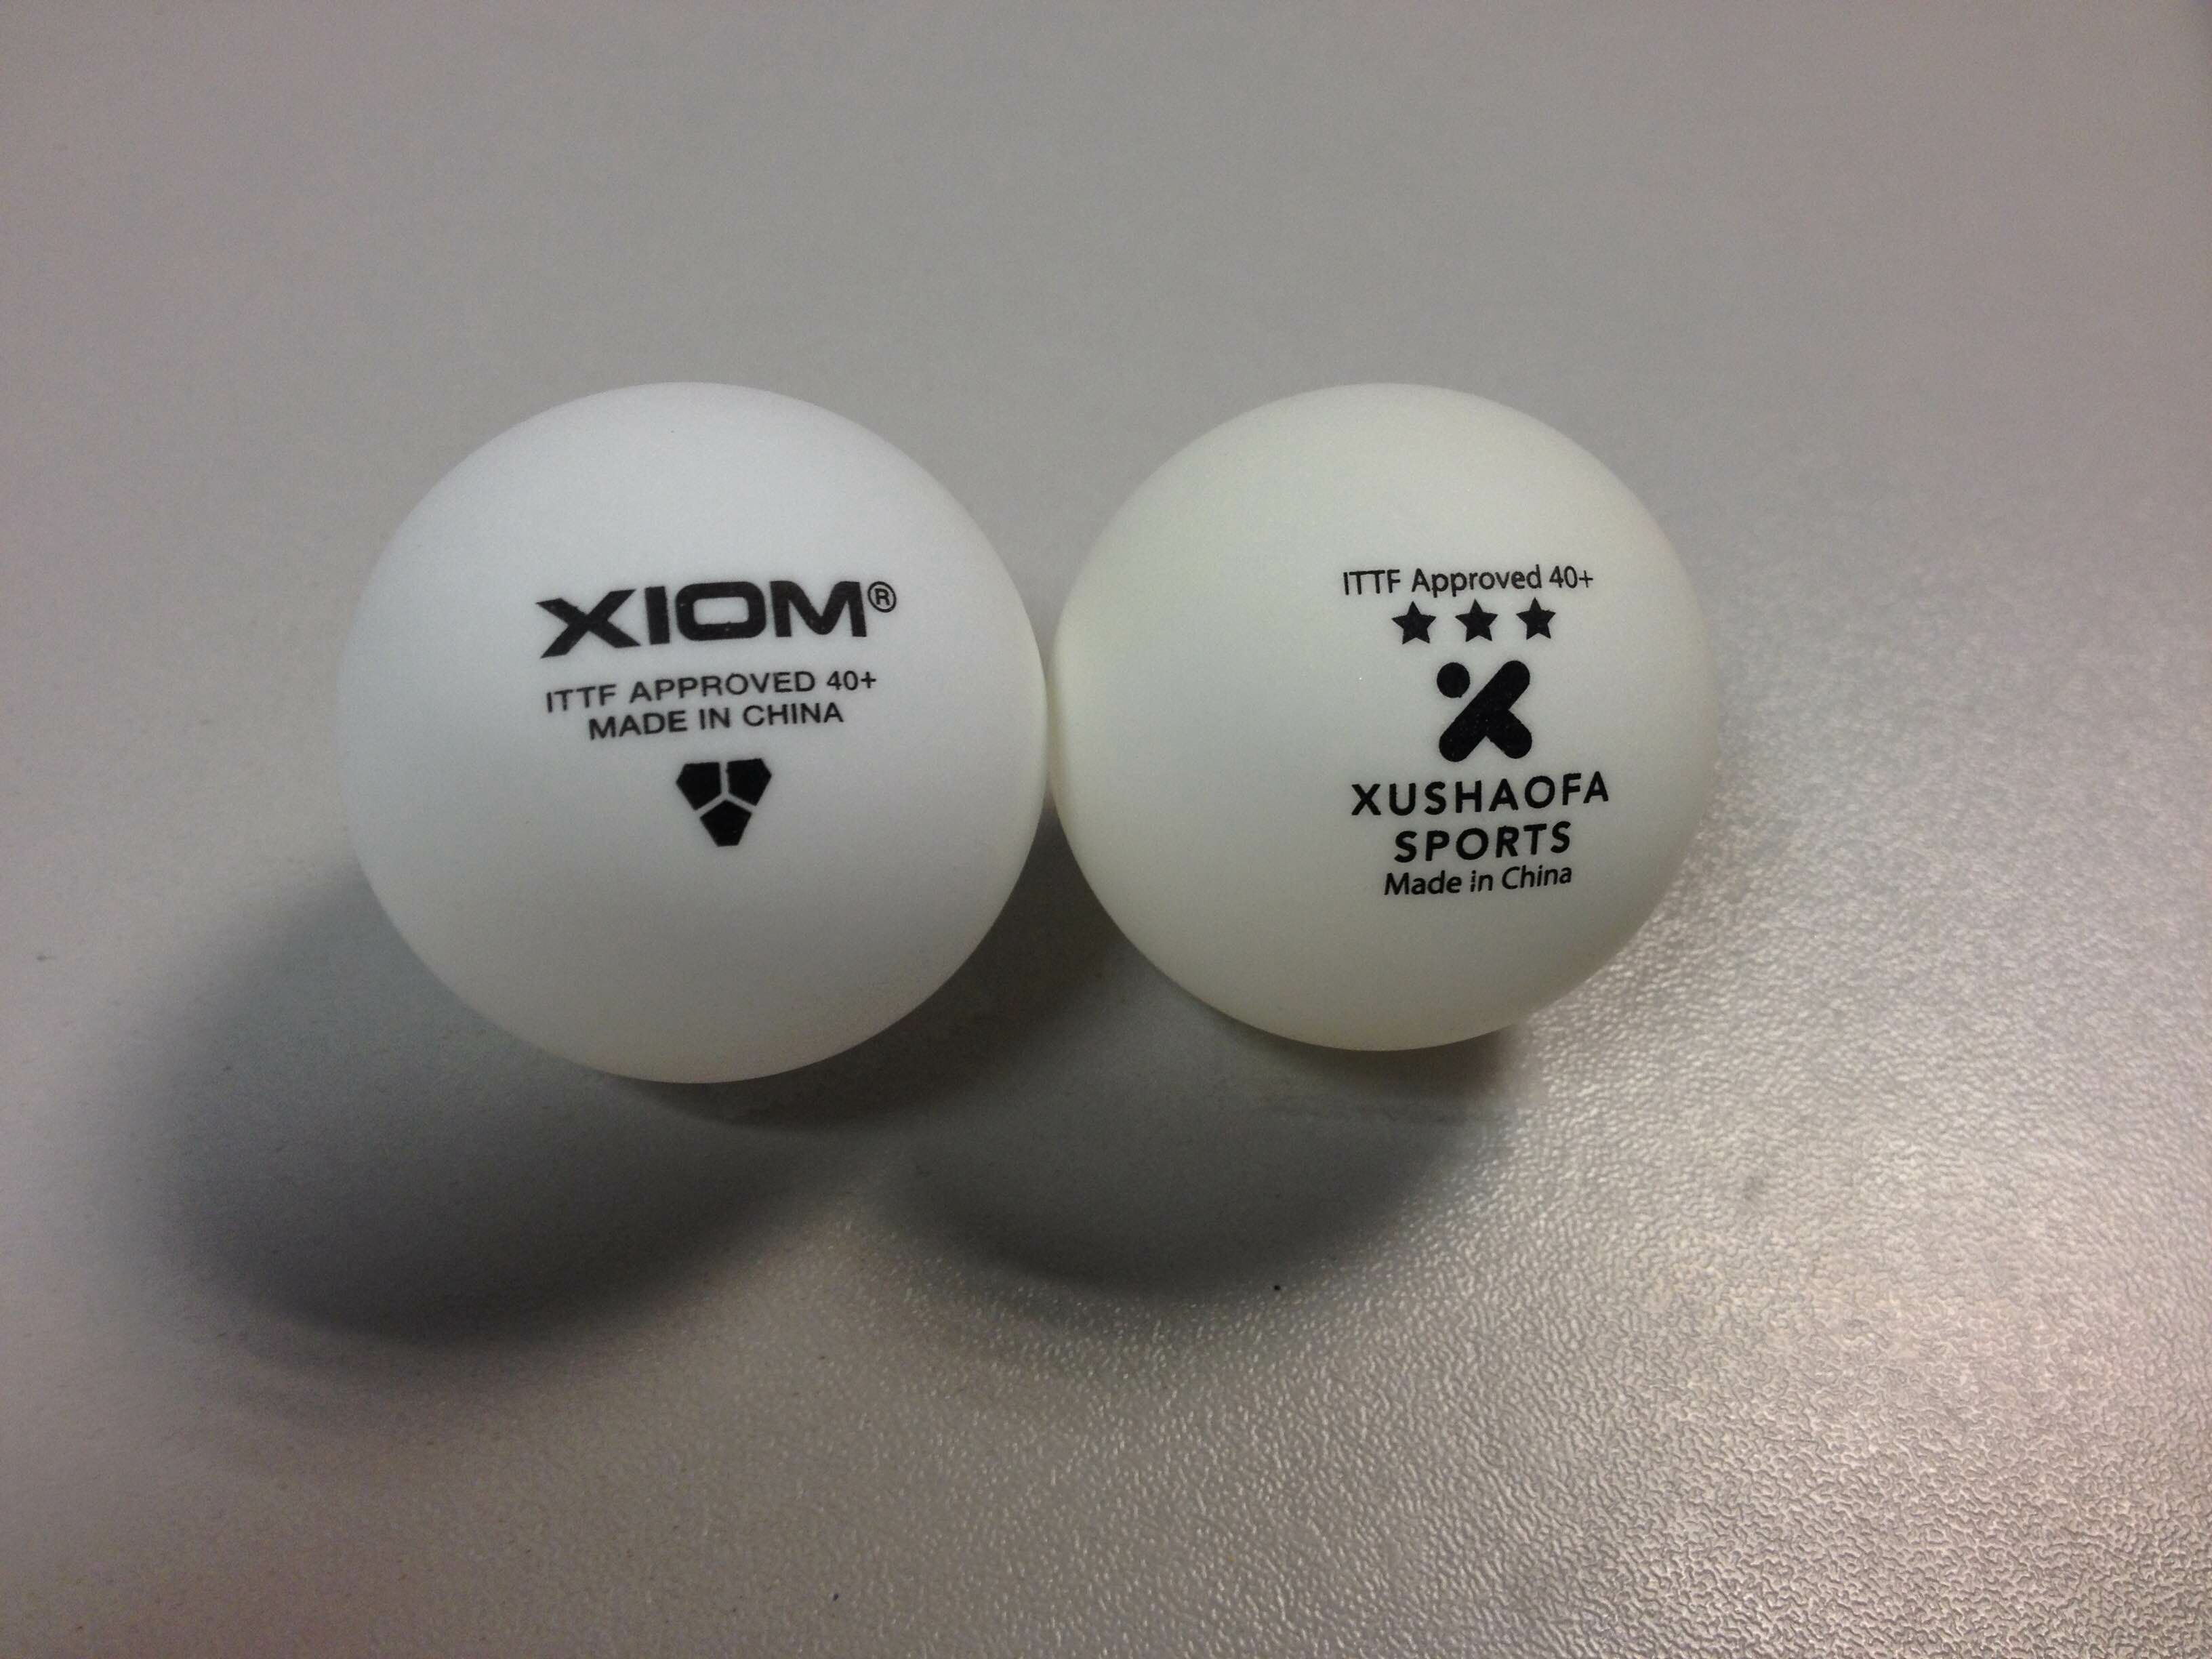 Xiom 3-Star 40+ Seamless és Xushaofa 3-Star 40+ Seamless pingponglabdák